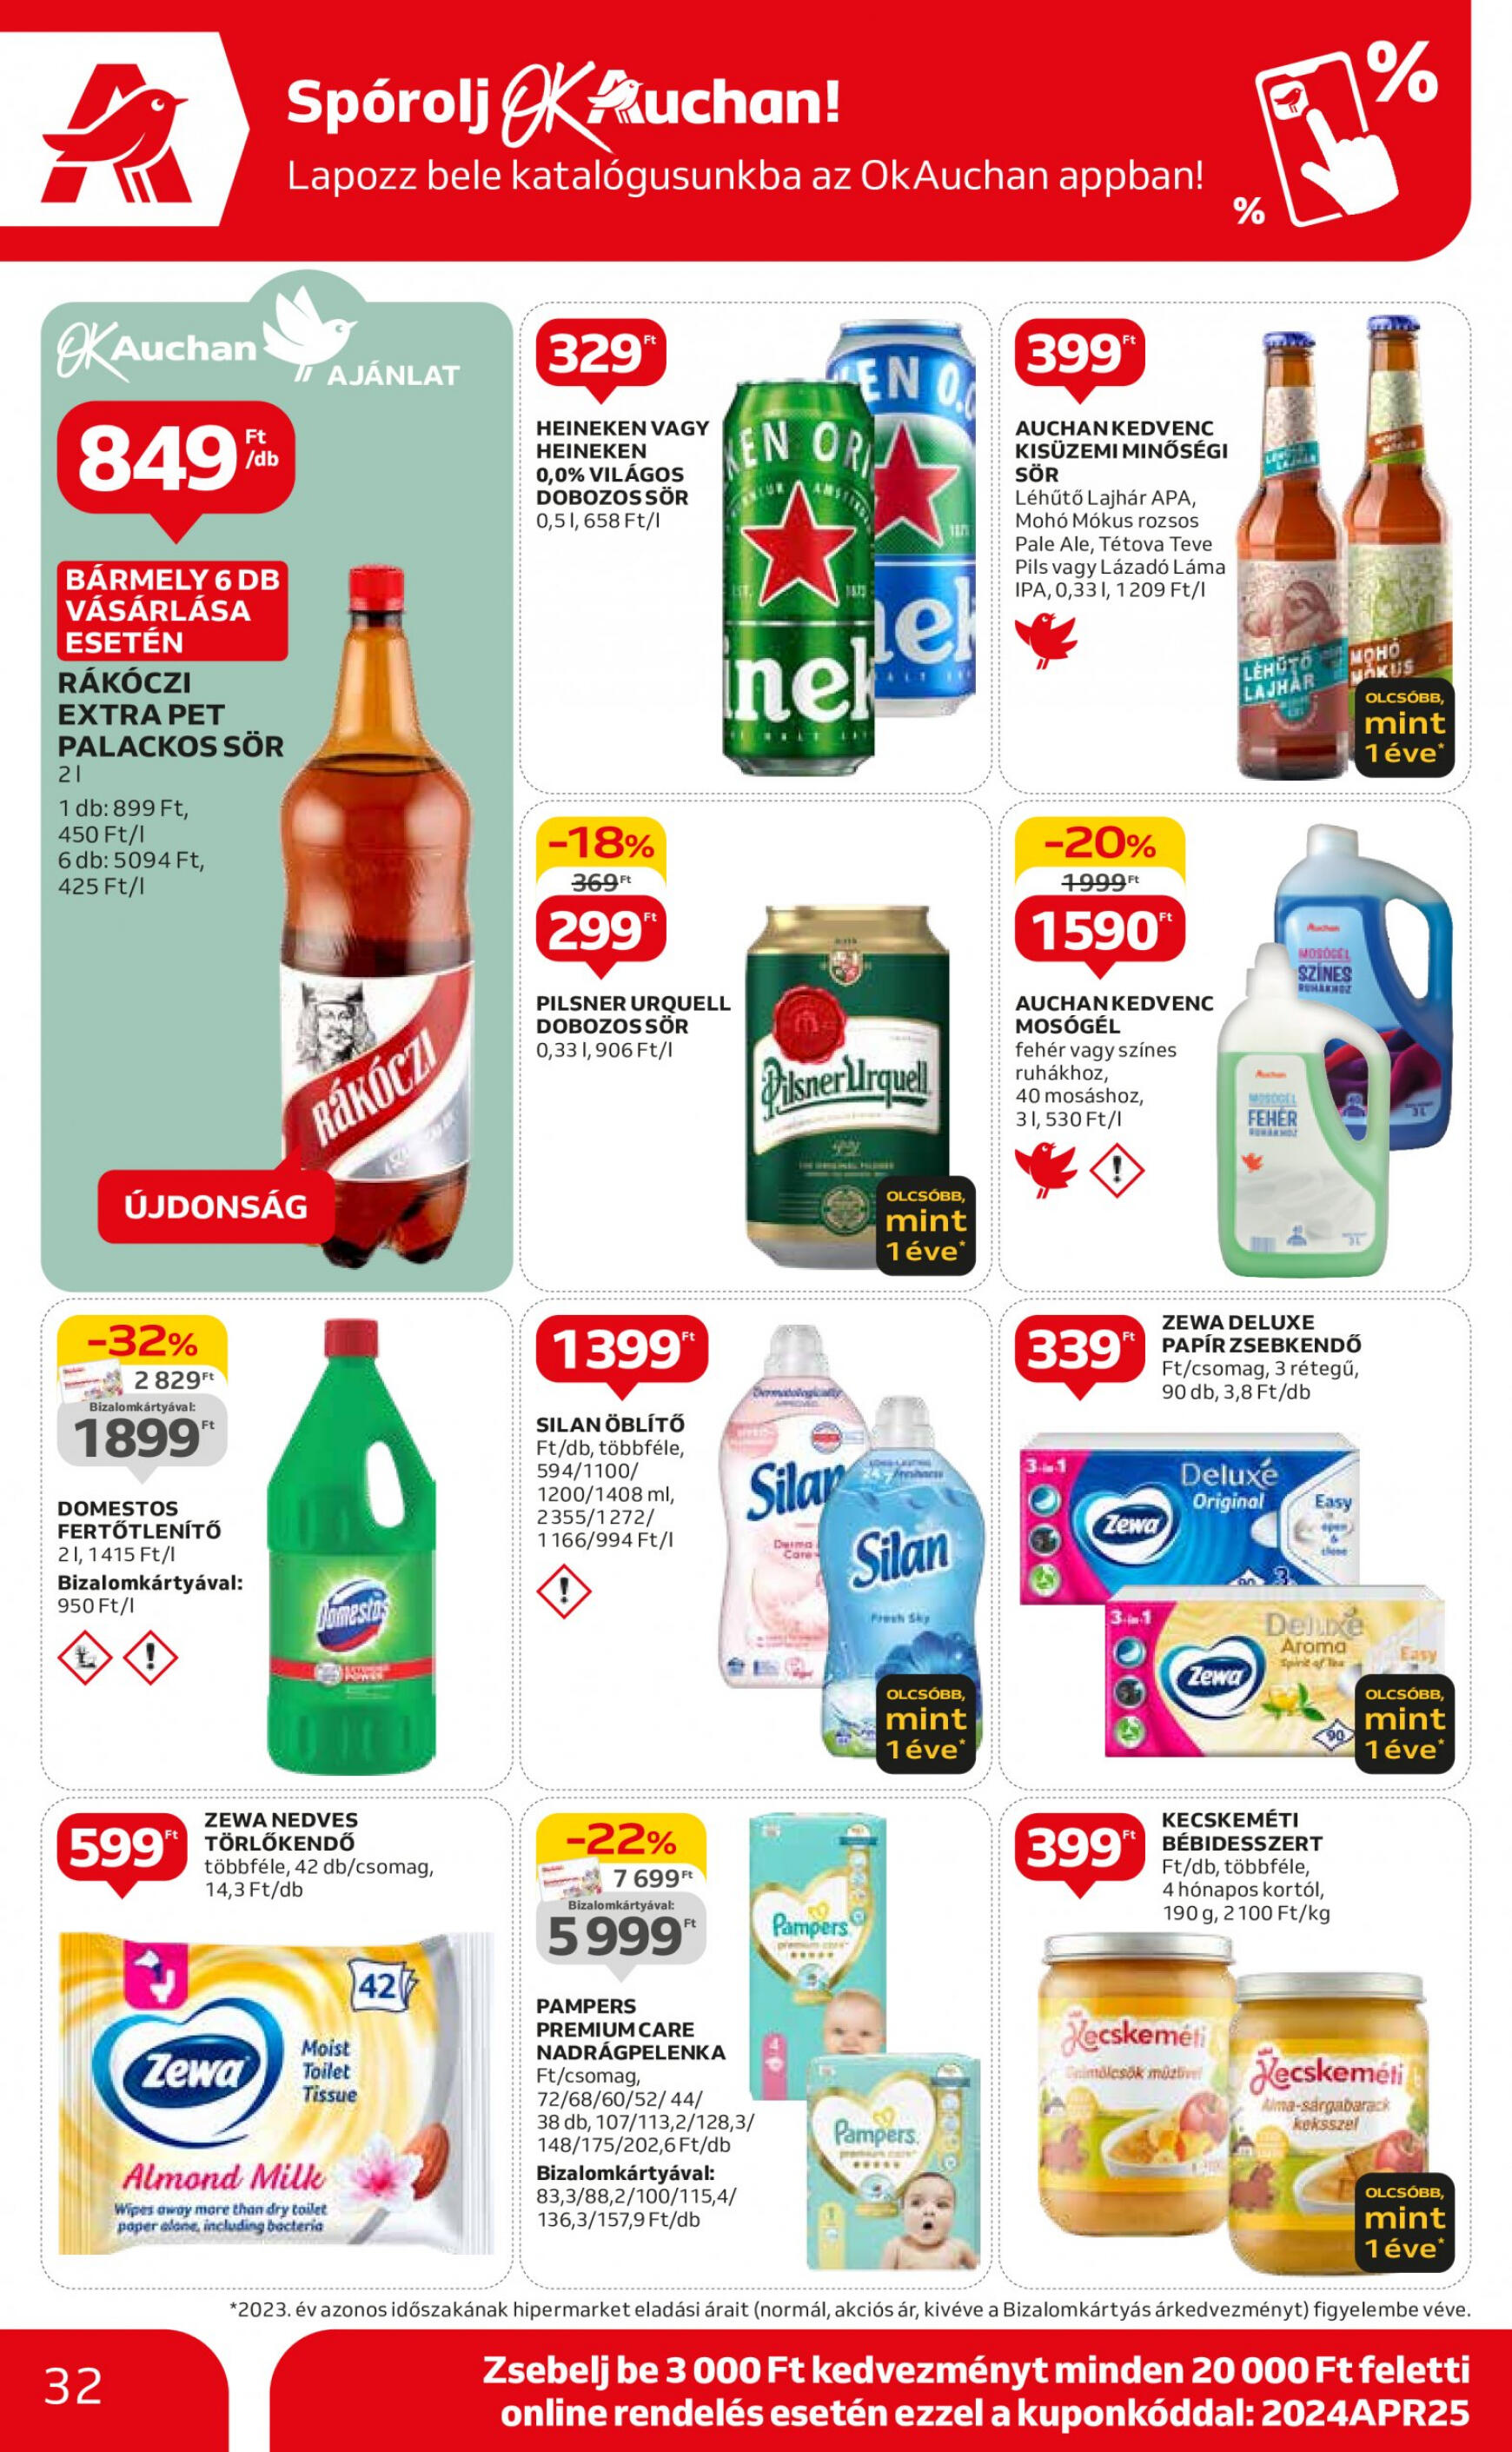 auchan - Aktuális újság Auchan 04.25. - 04.30. - page: 32